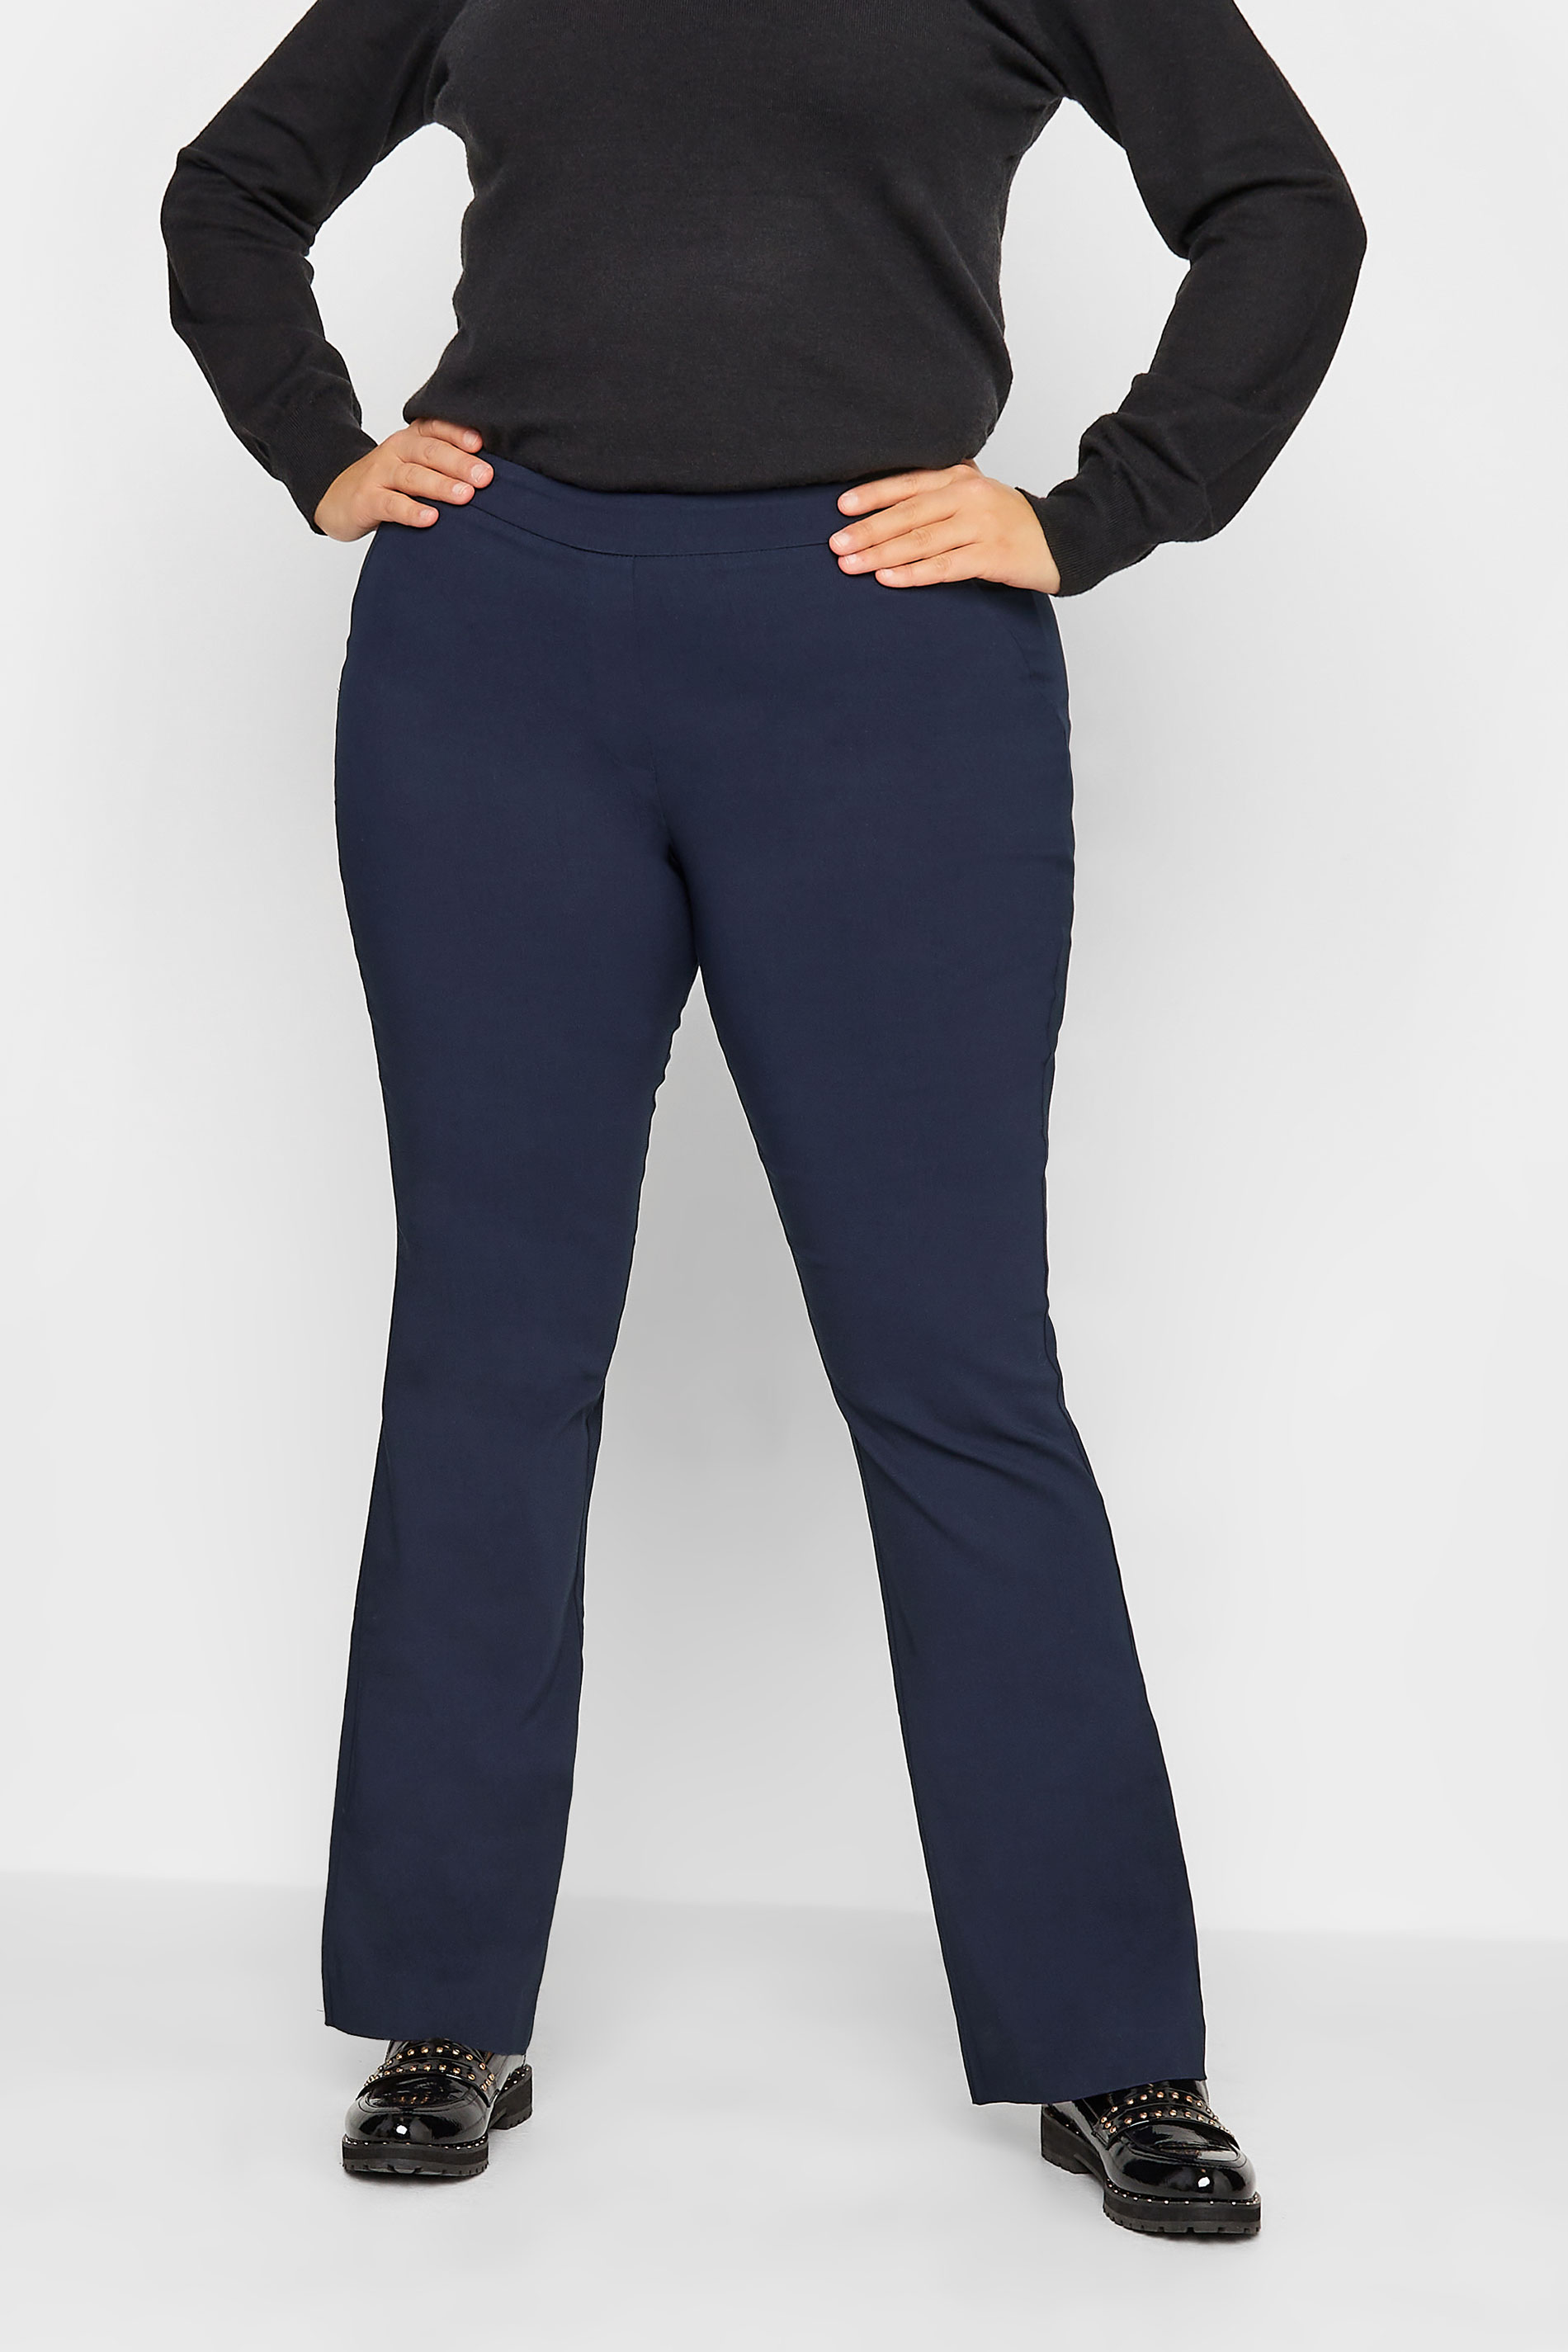 LTS Tall Women's Navy Blue Bi Stretch Bootcut Trousers | Long Tall Sally 1